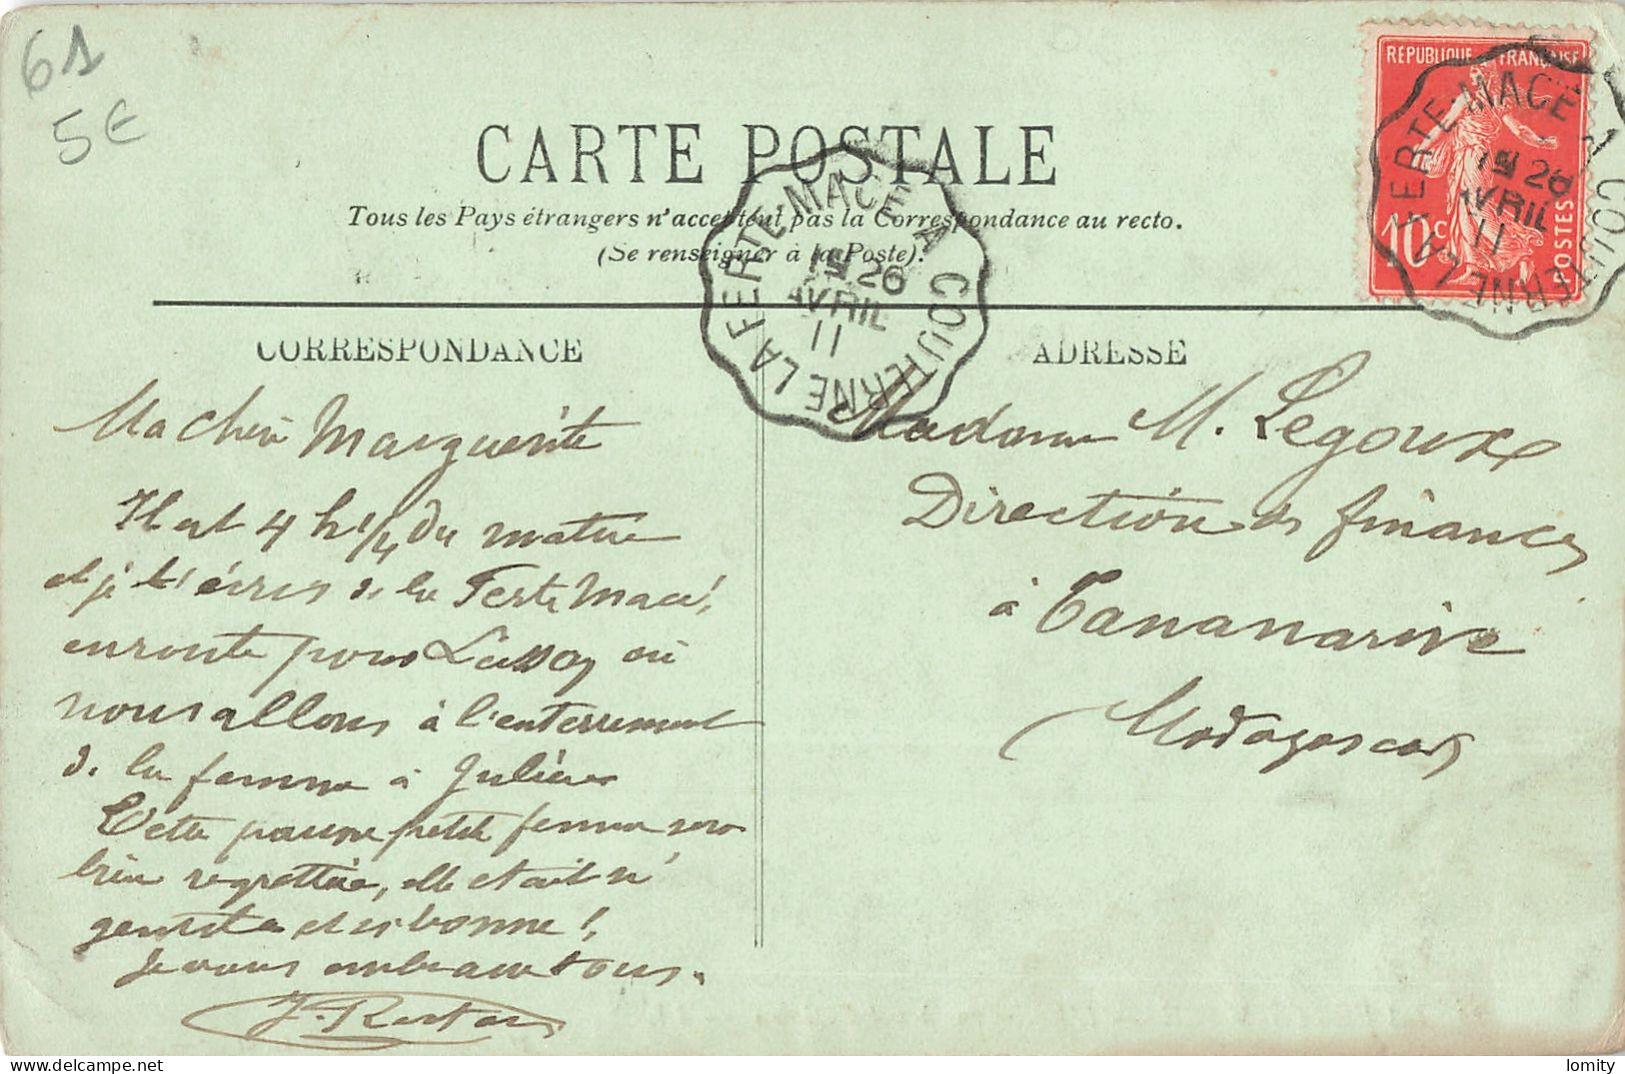 Destockage lot de 17 cartes postales CPA de l' Orne Bagnoles Alençon